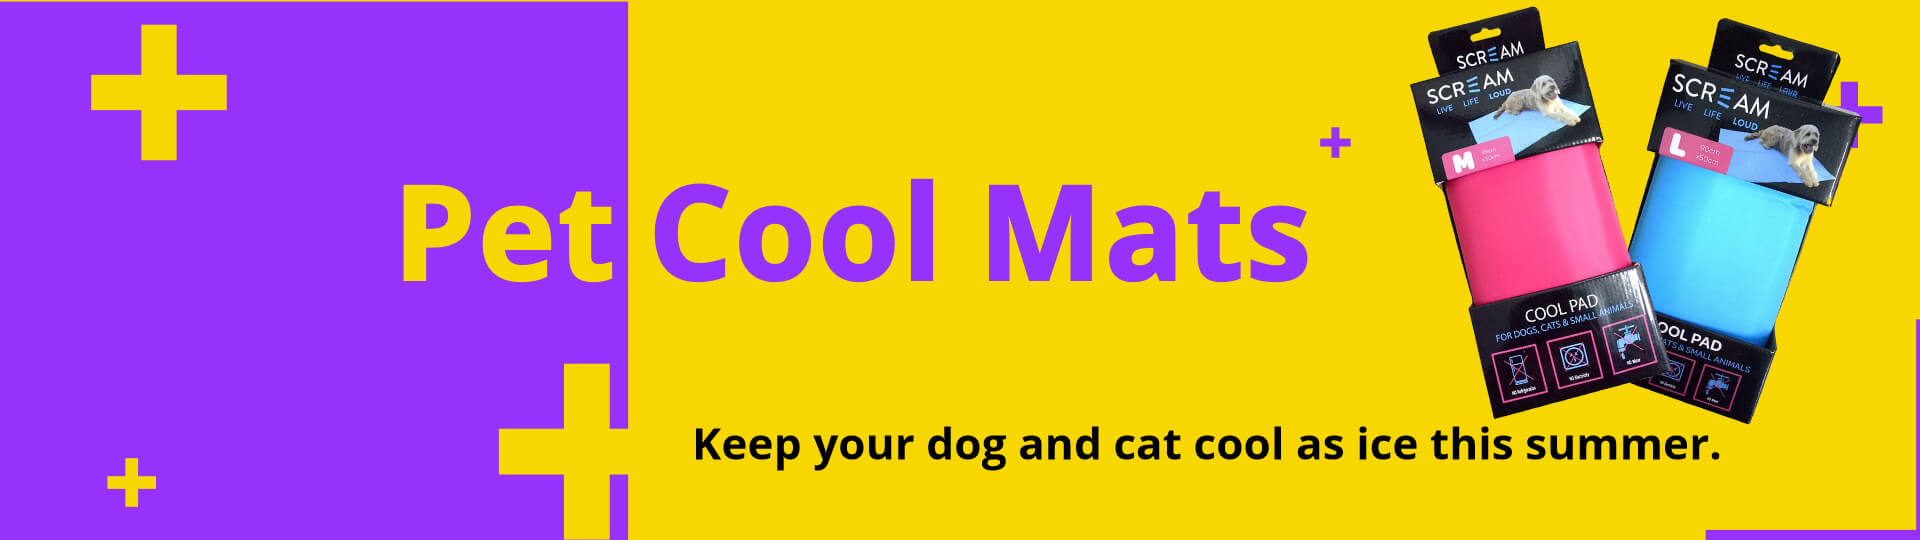 Pet Cool Mats